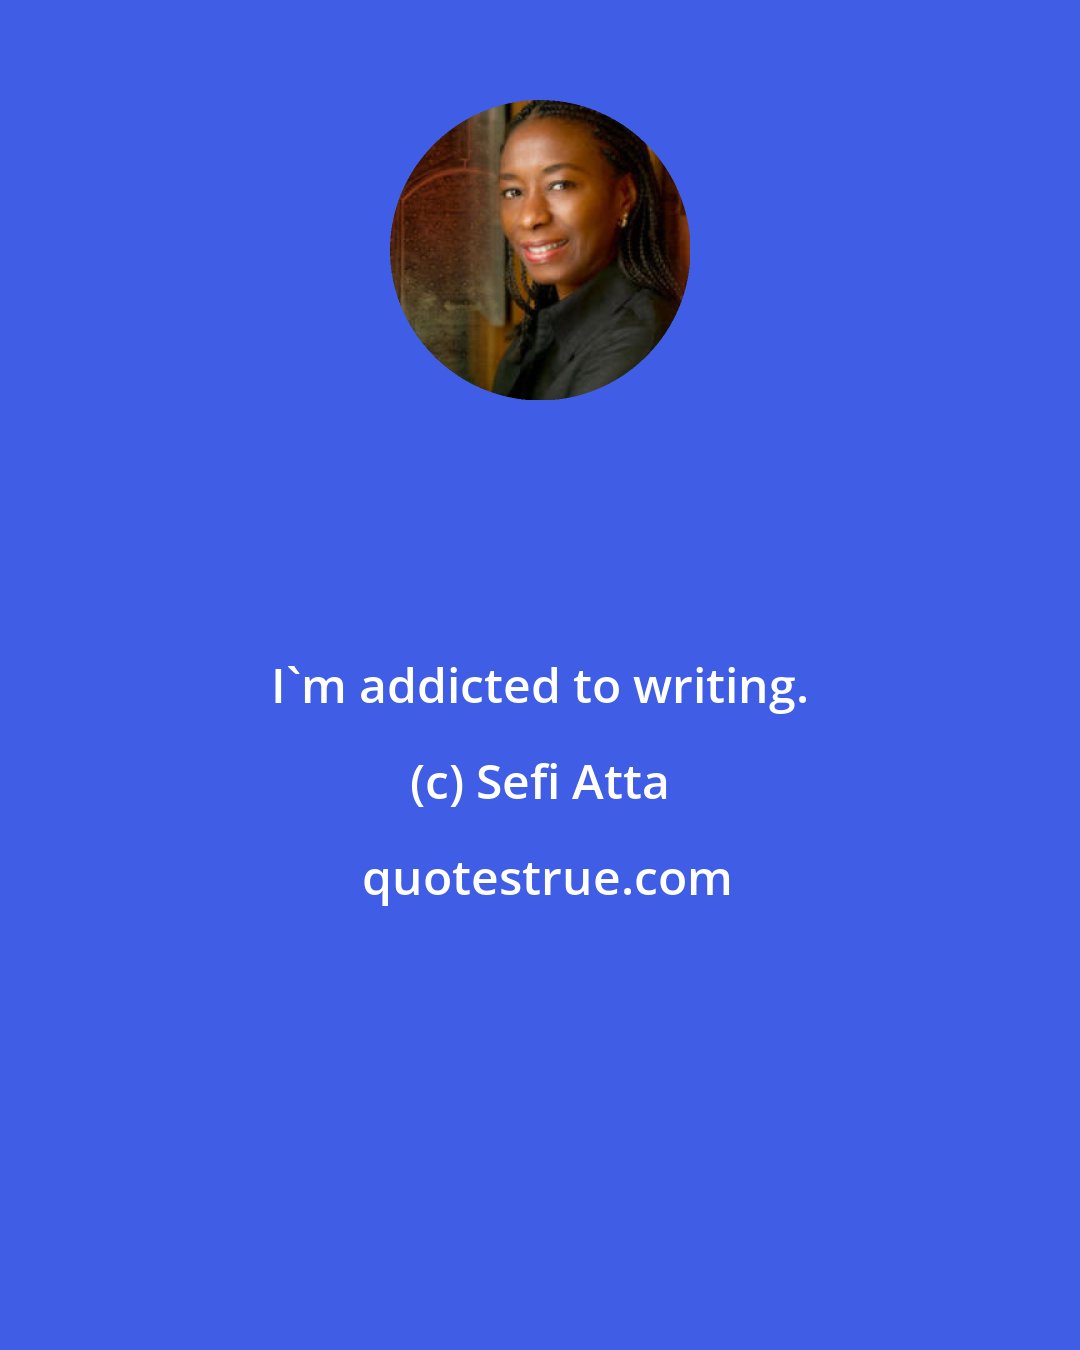 Sefi Atta: I'm addicted to writing.